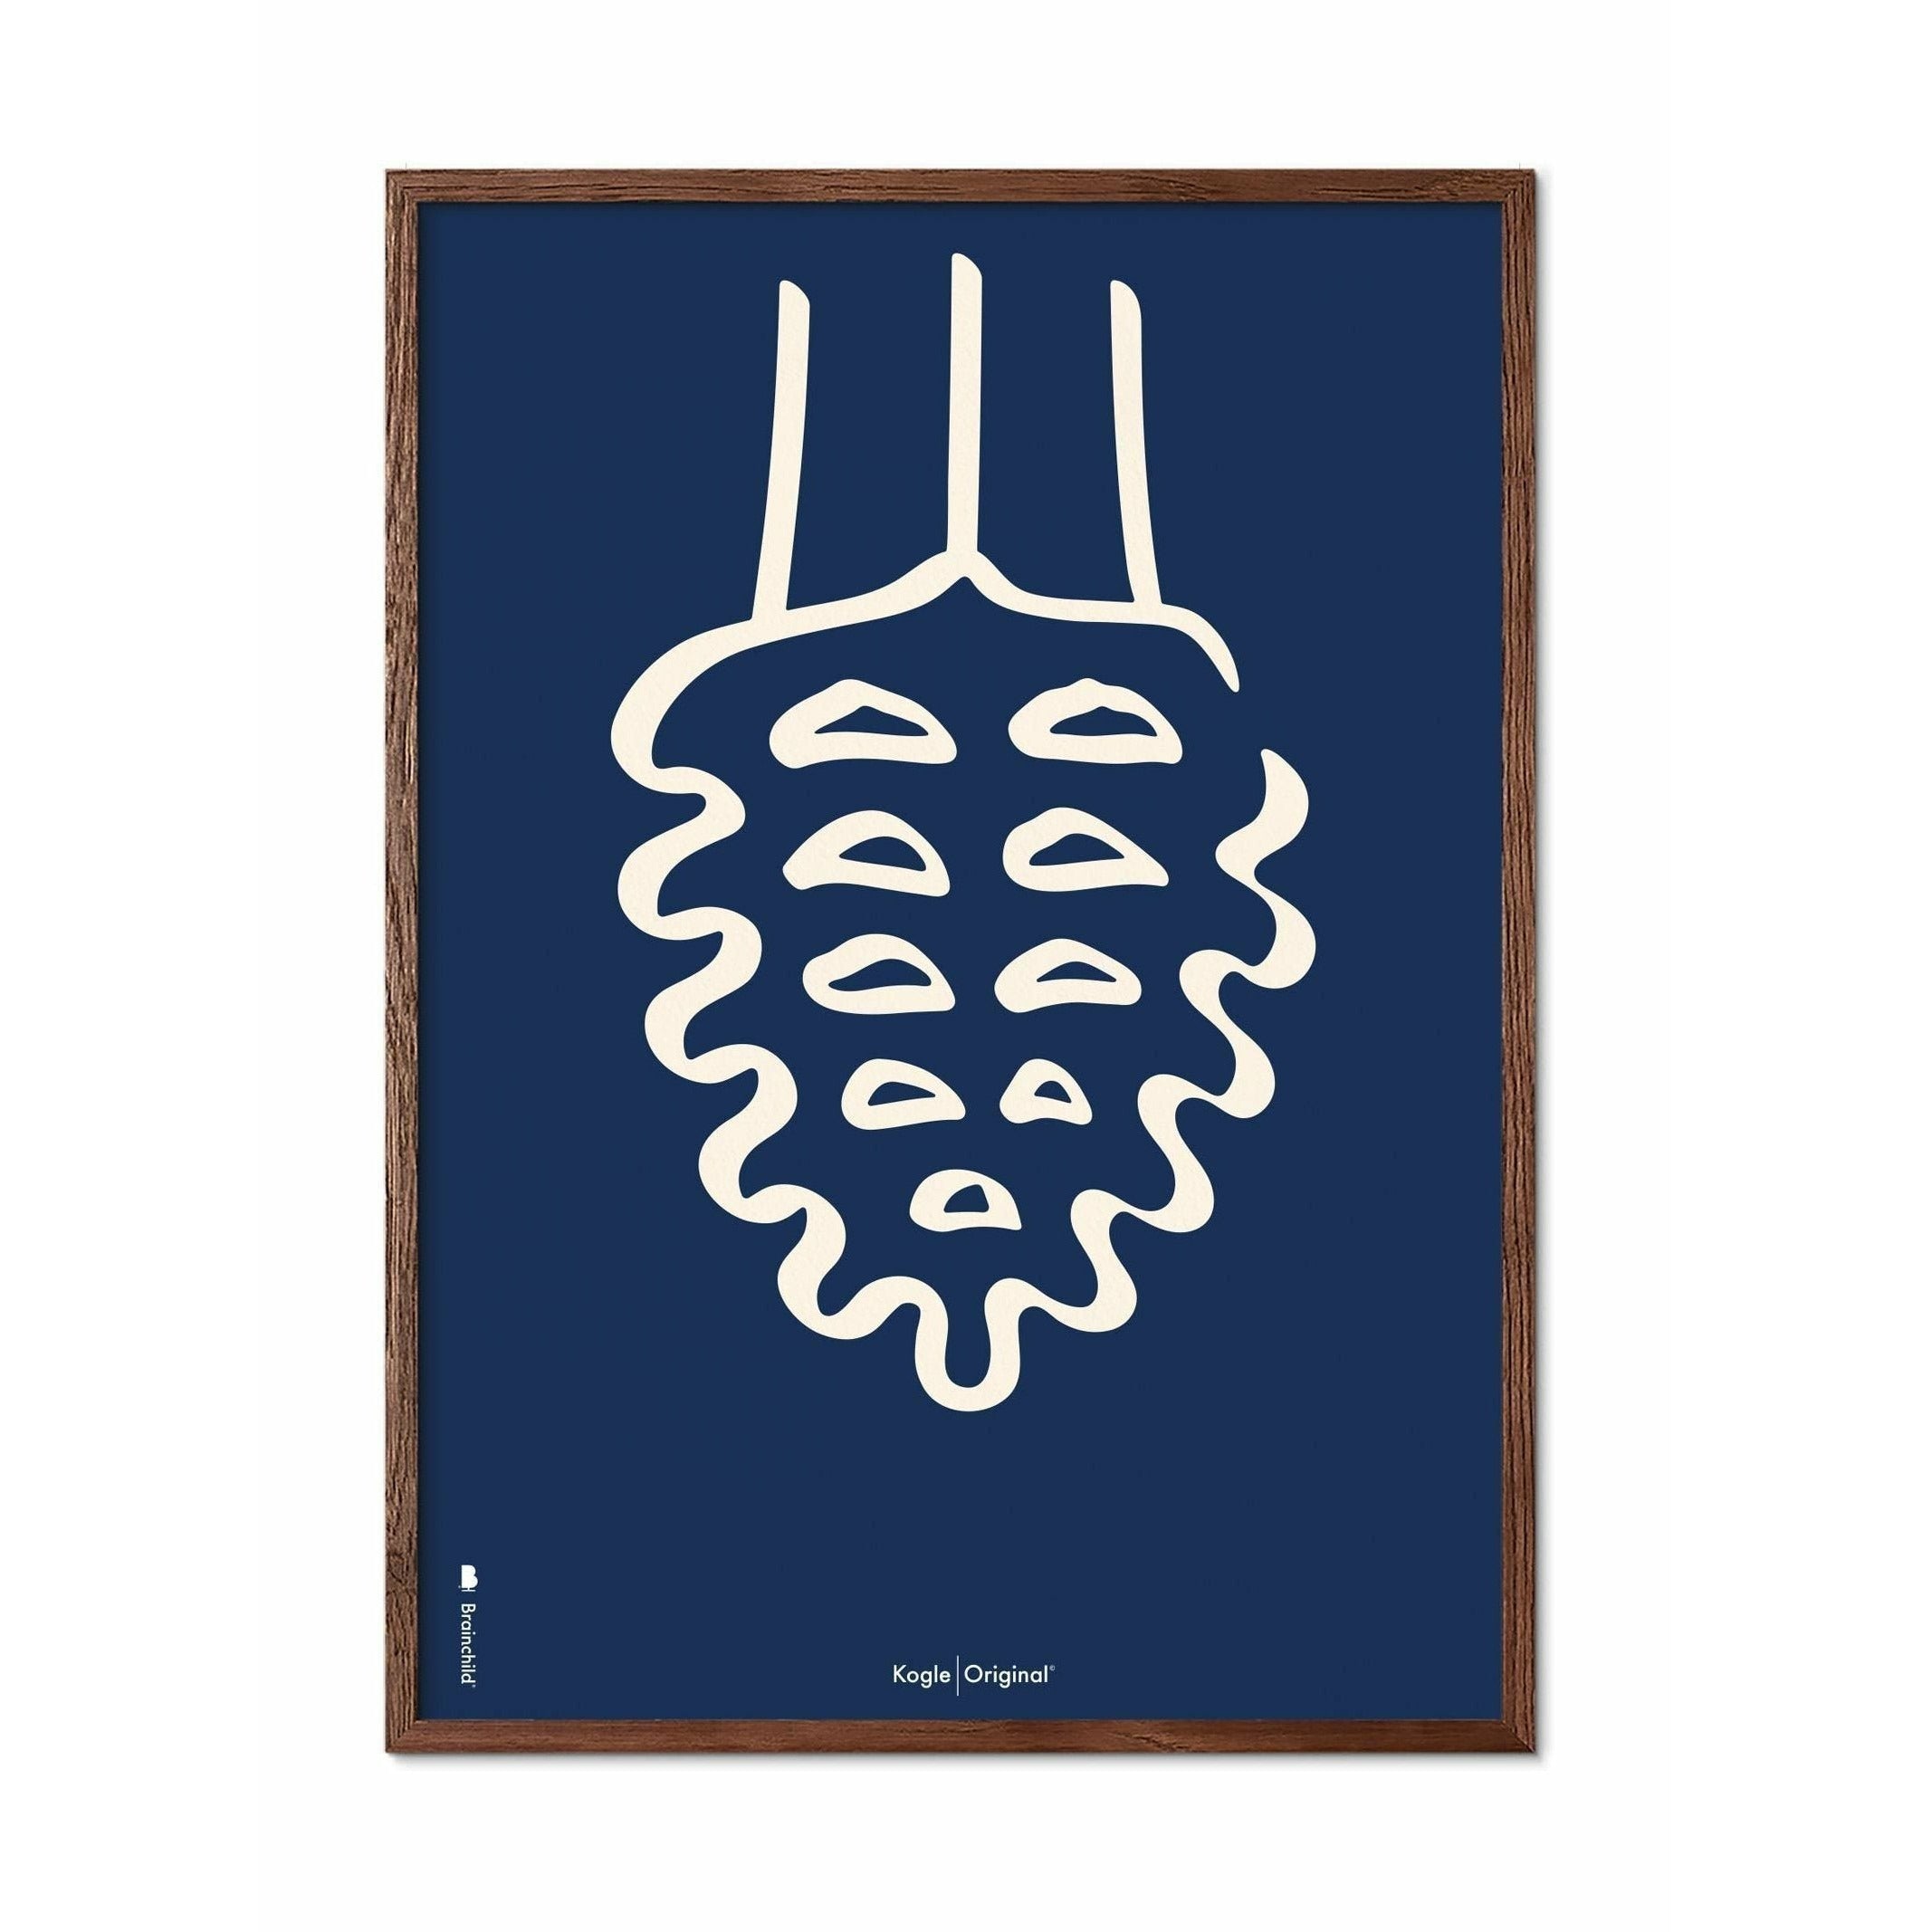 Brainchild Koller strok affisch, ram i mörkt trä A5, blå bakgrund